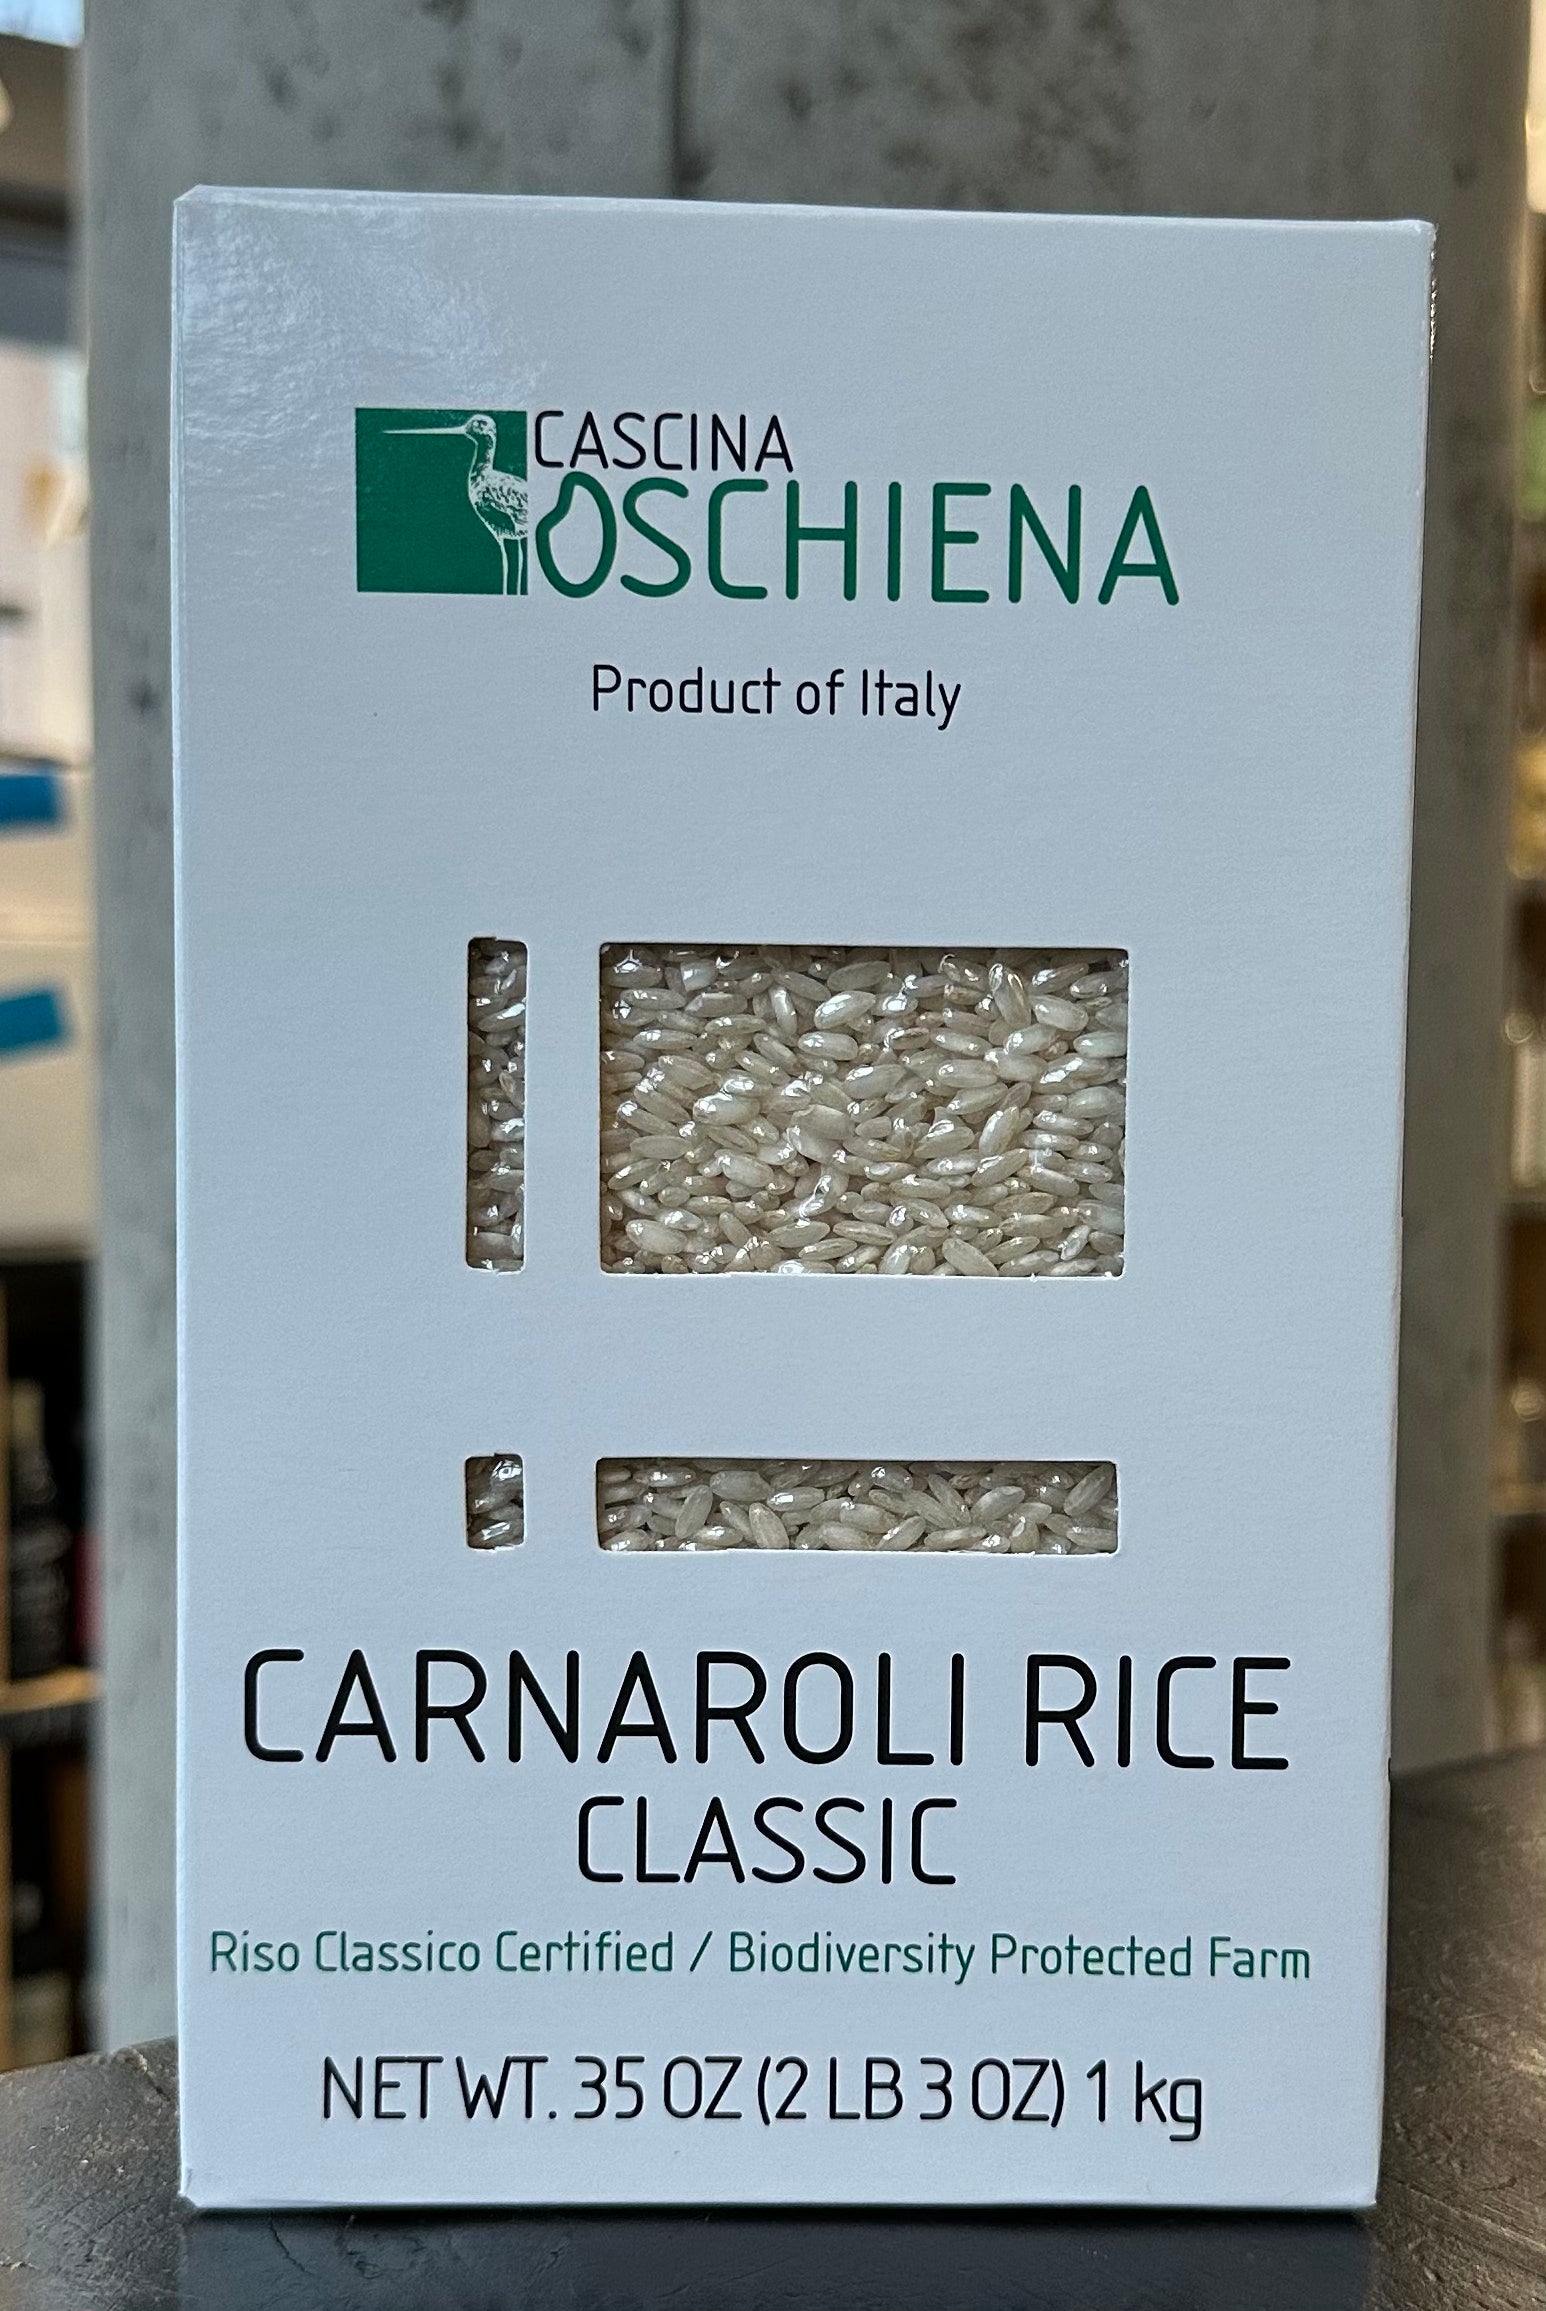 Cascina Oschiena Carnaroli Rice "Classic"